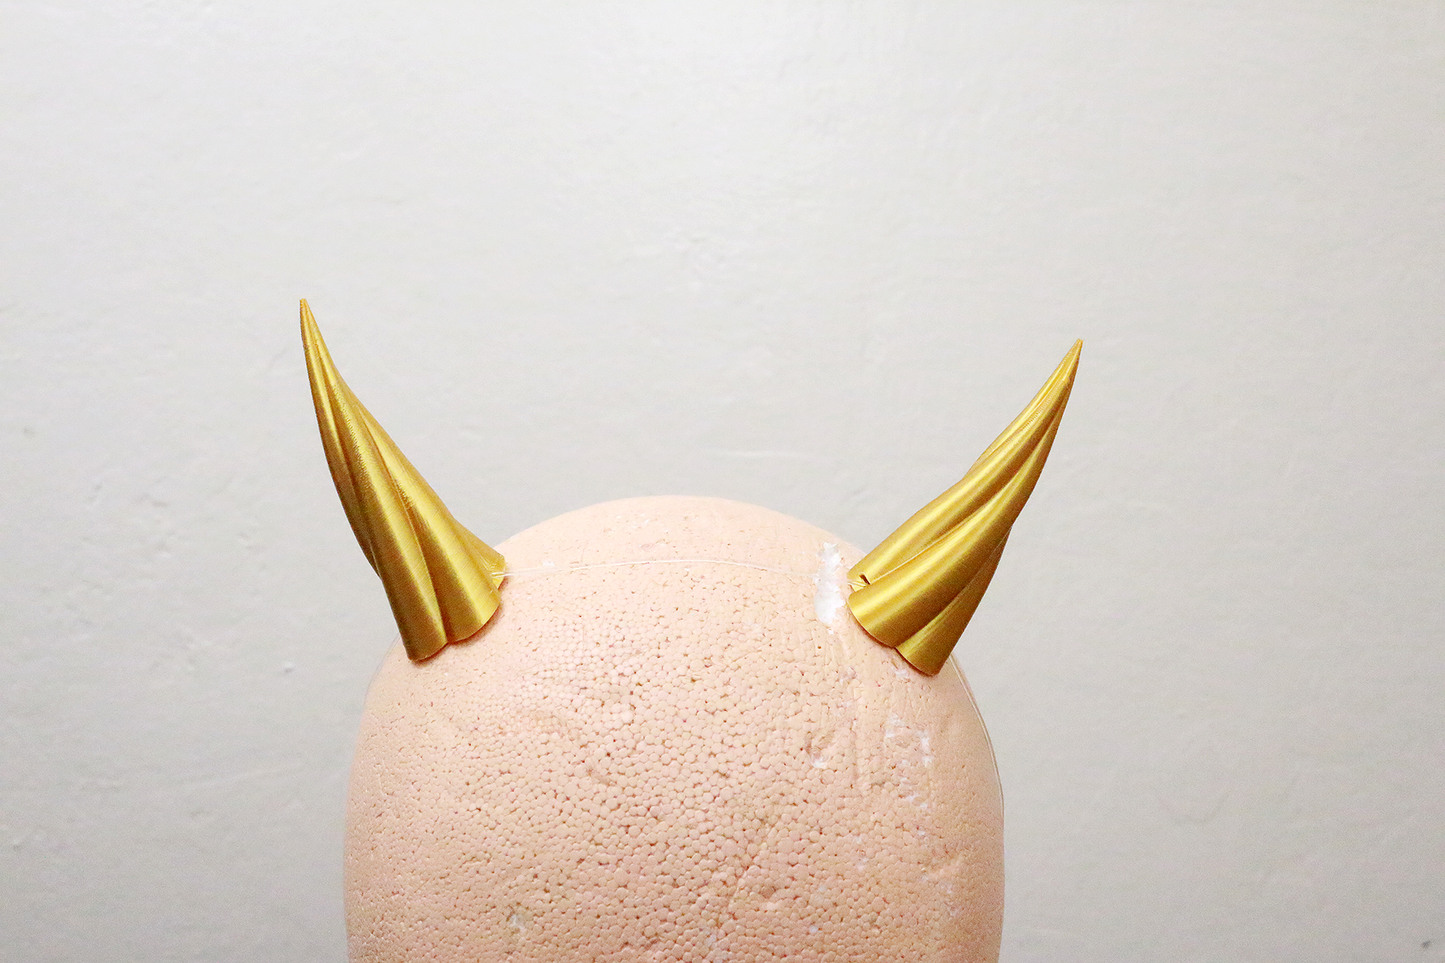 Small "Imp" Costume Horns